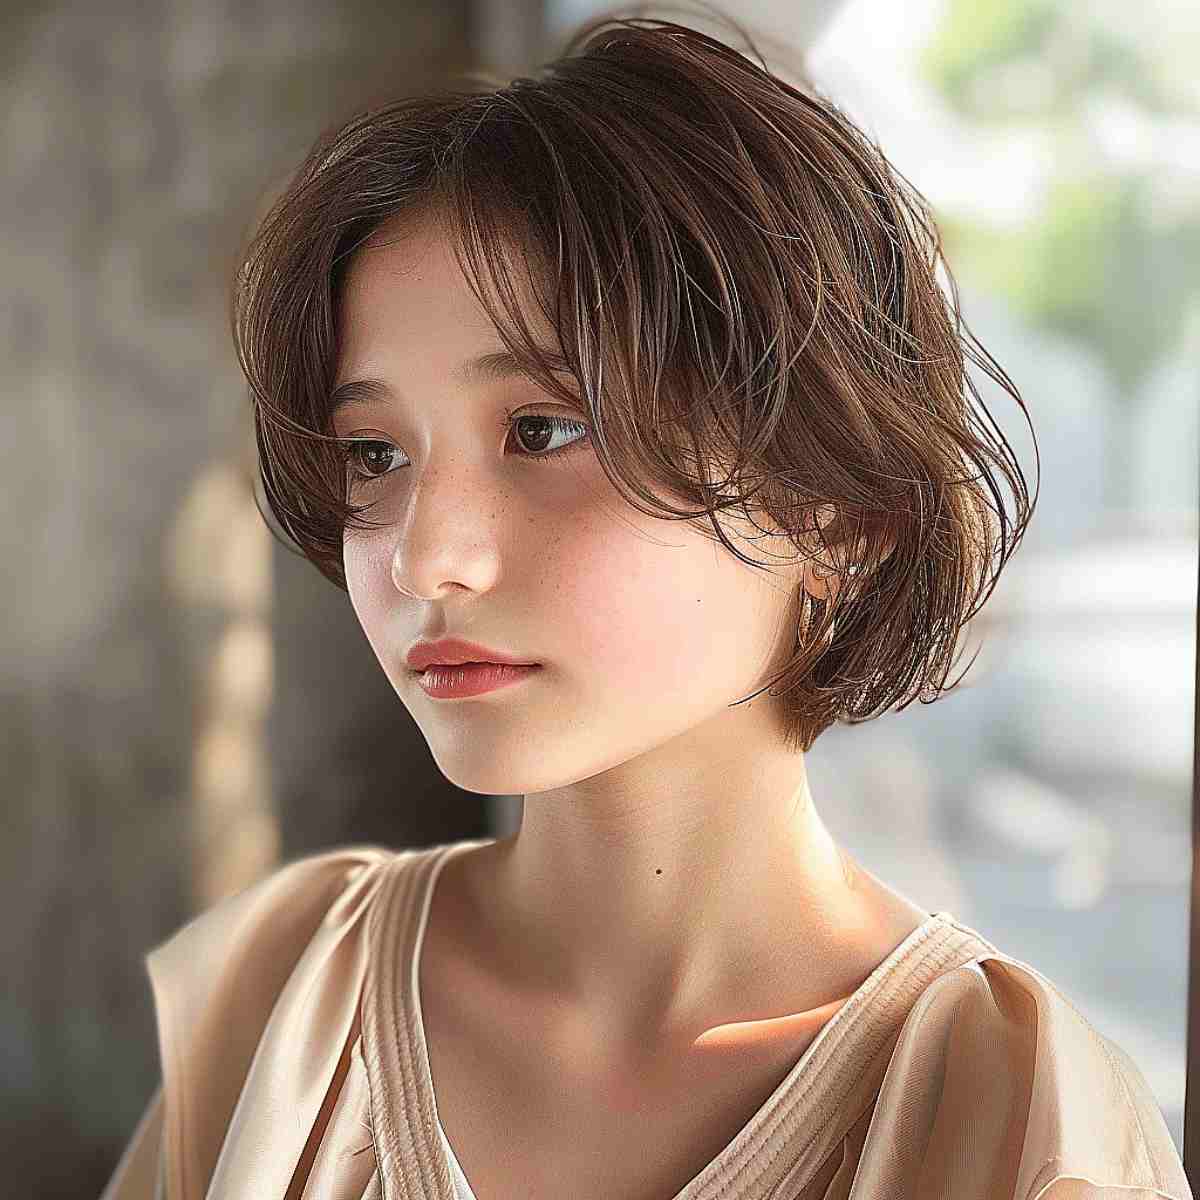 Cute Short Haircut for an Asian Girl